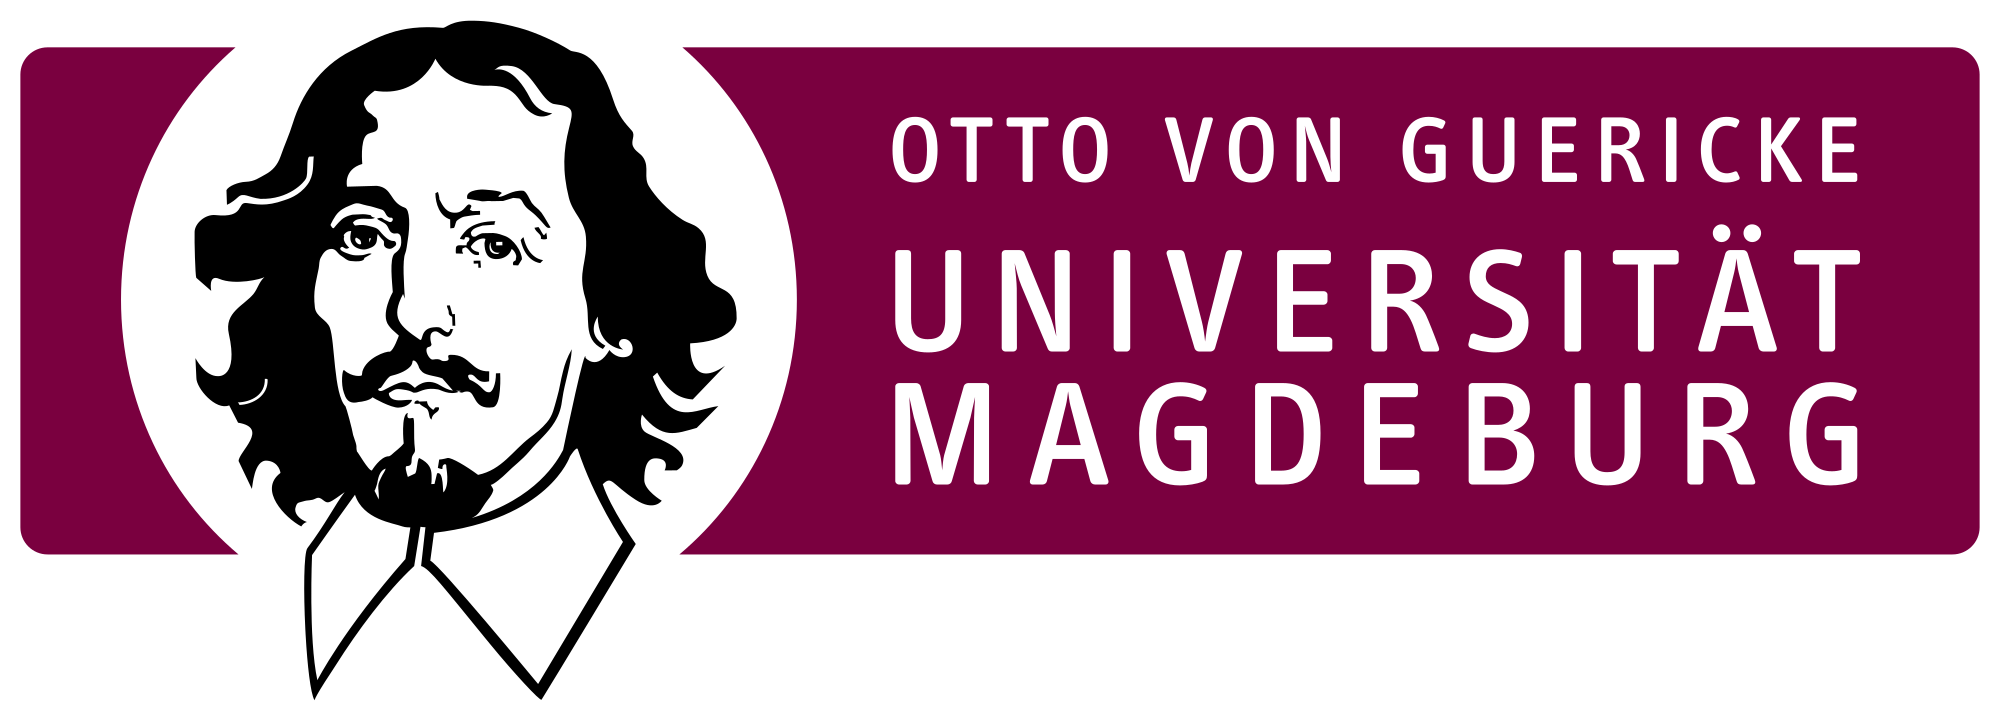 /assets/contentimages/Otto-von-Guericke-Universitat_Magdeburg.png